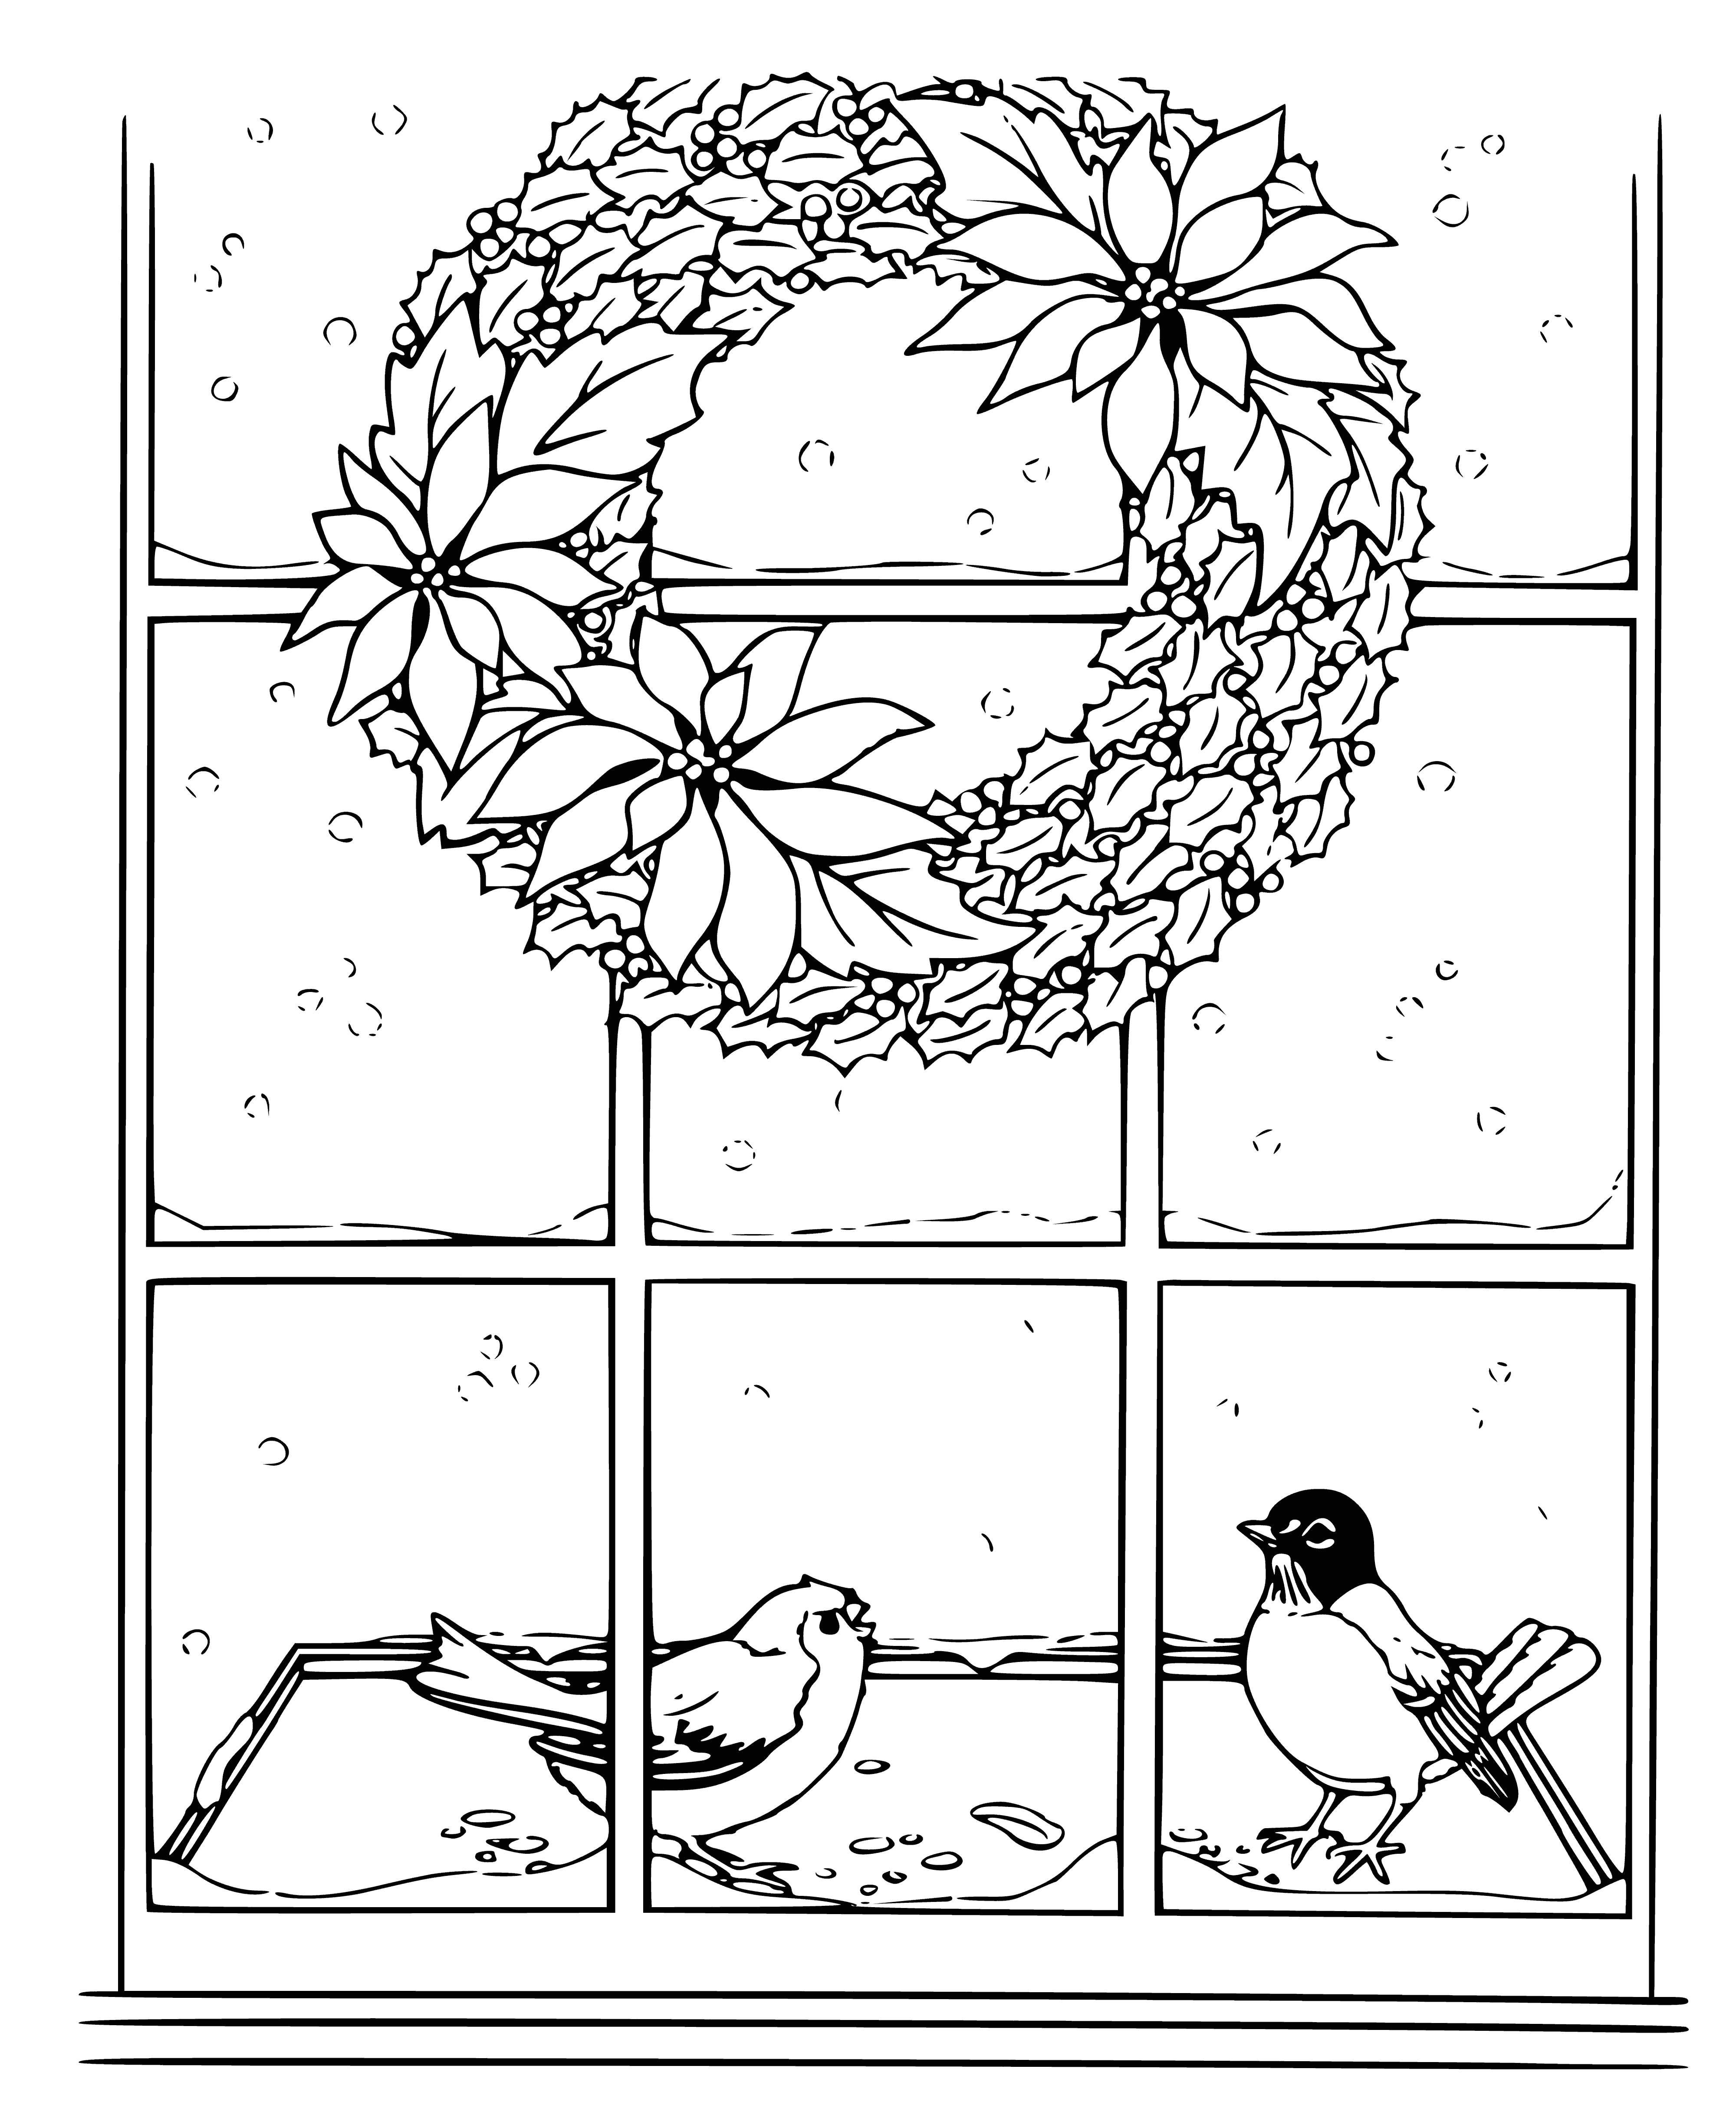 Ptaki za oknem kolorowanka